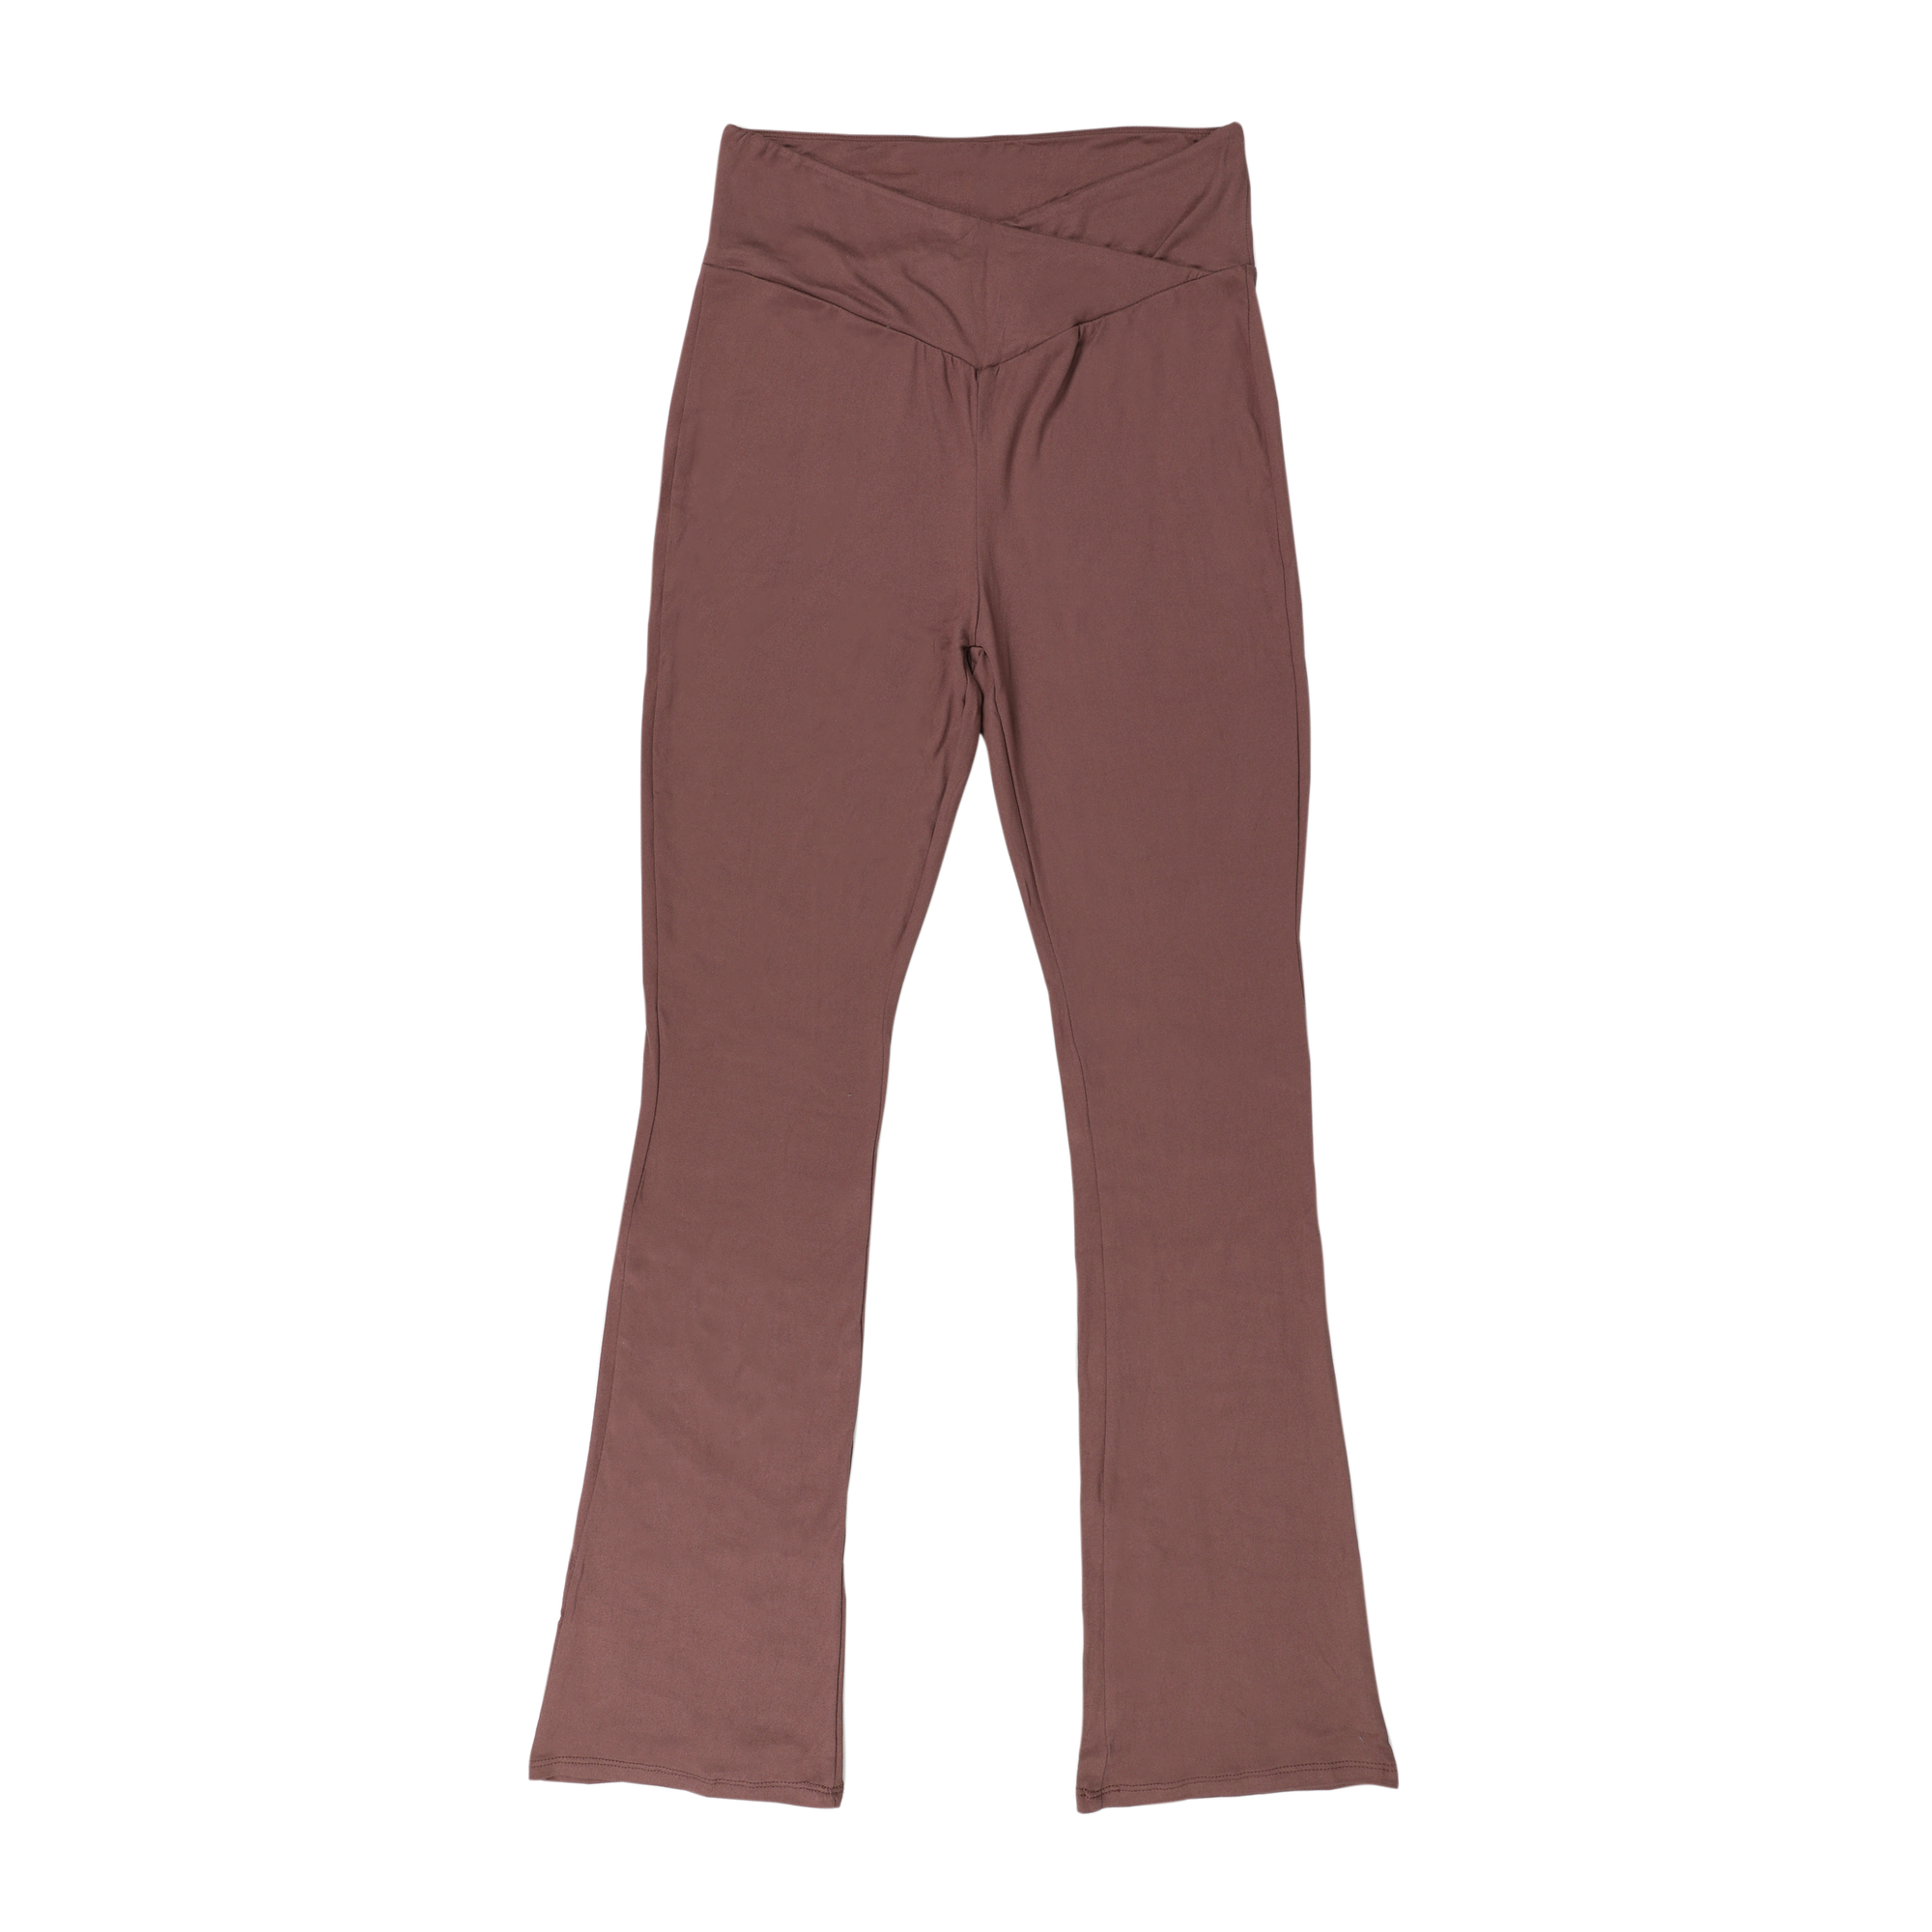 Crossover Yoga Pants – Rustic Impulse Boutique